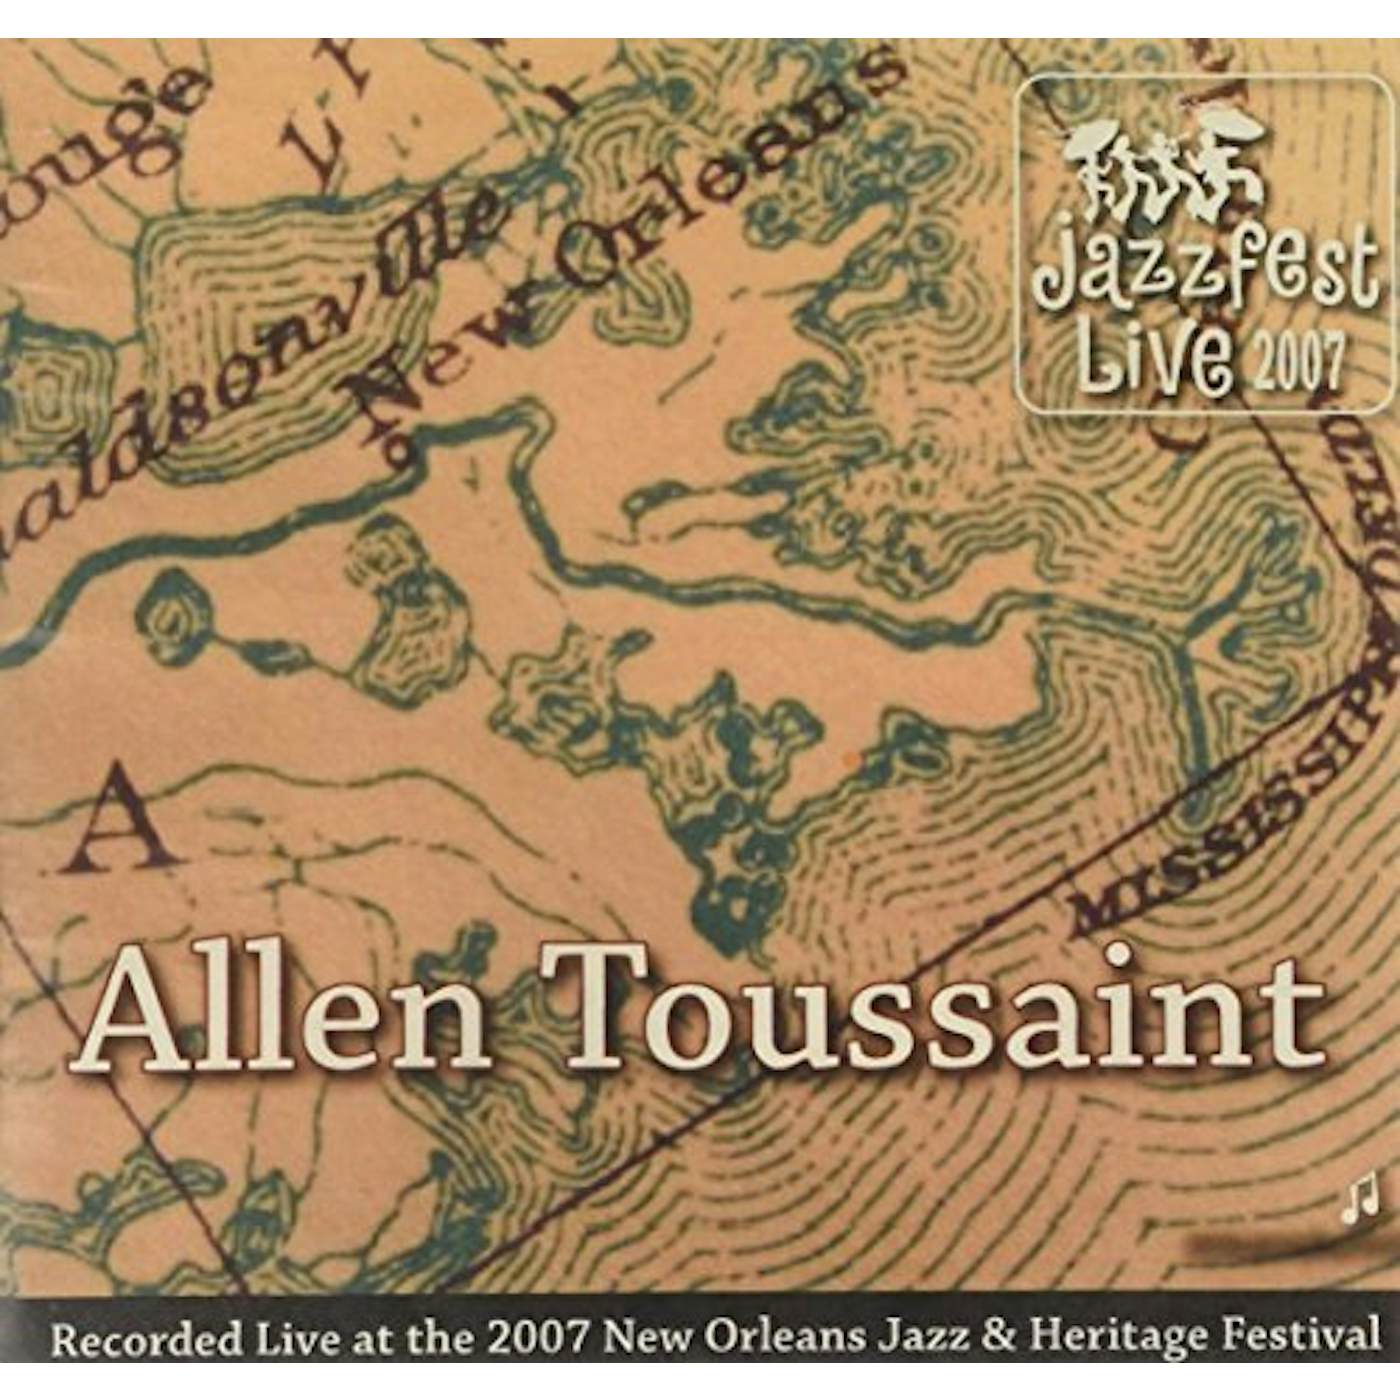 Allen Toussaint JAZZ FEST 2007 CD